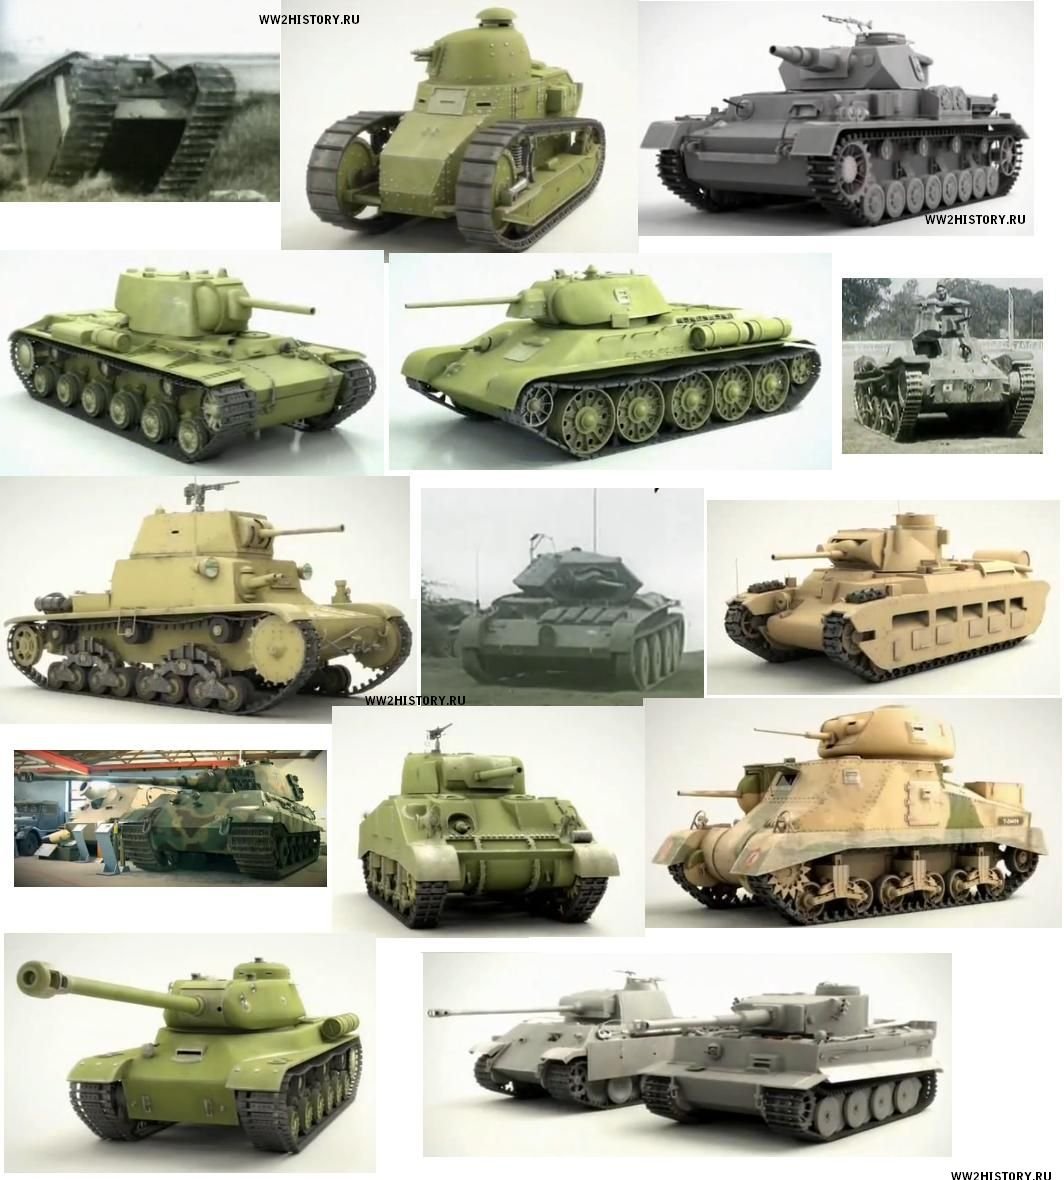 Виды танков фото и название